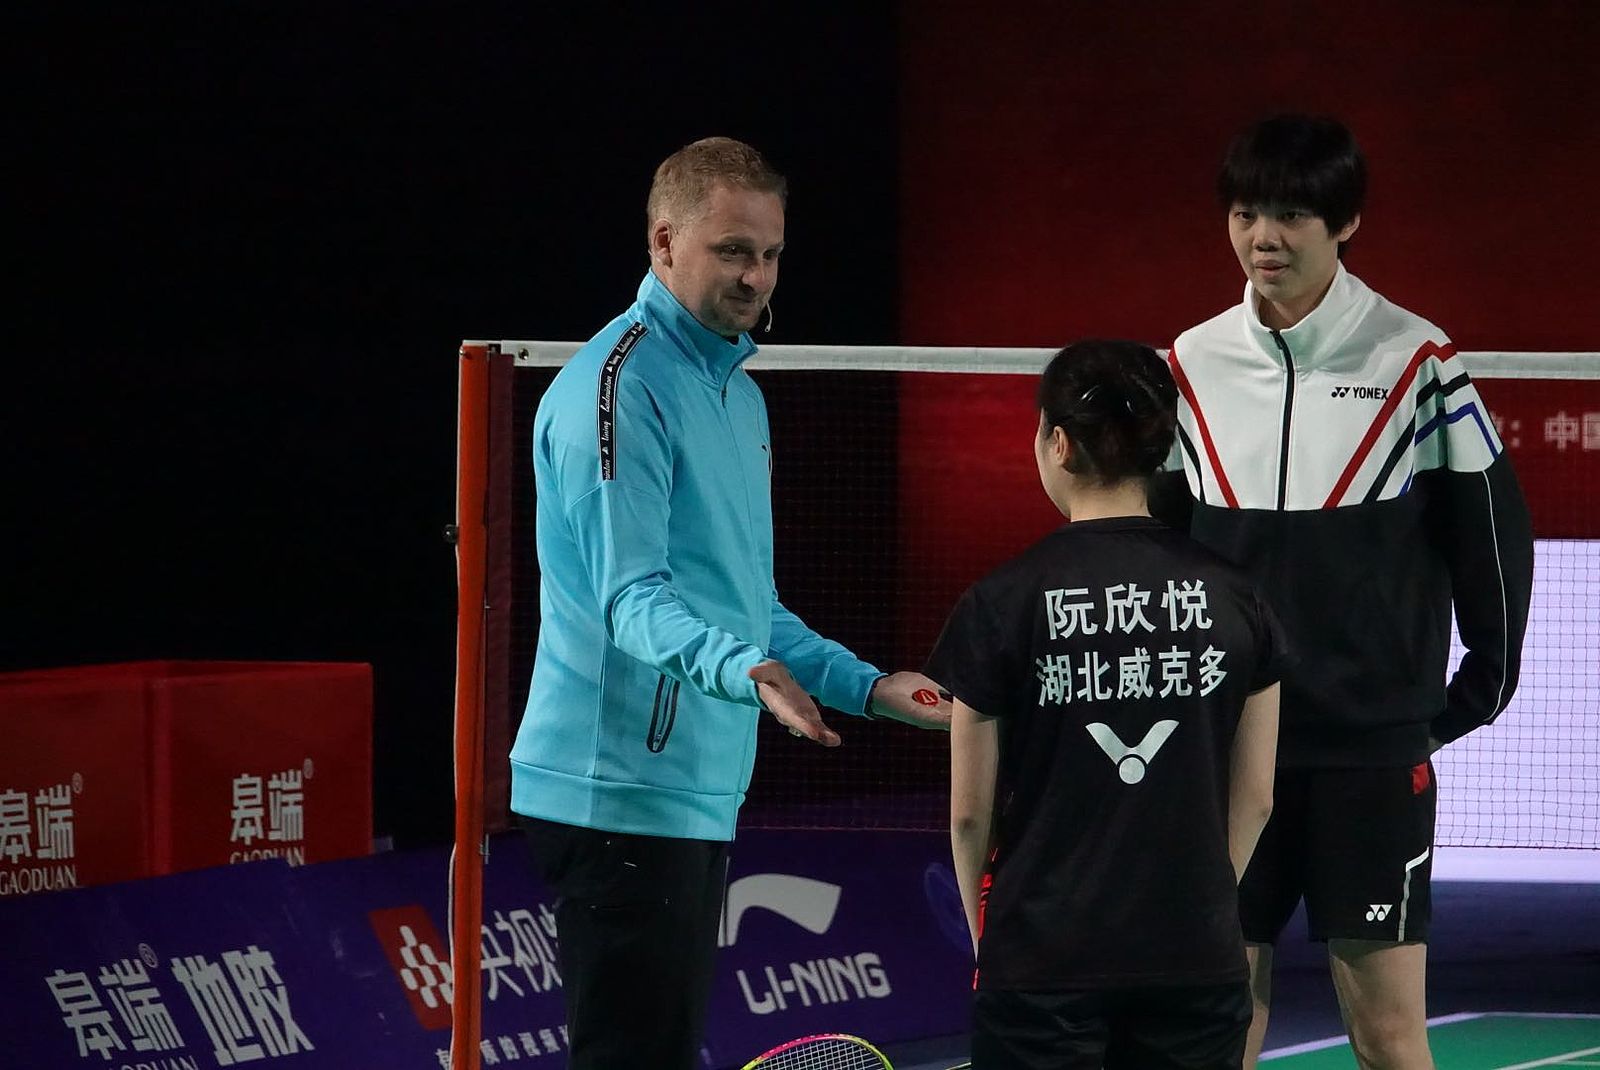 David Schwerin coin toss at China National Games